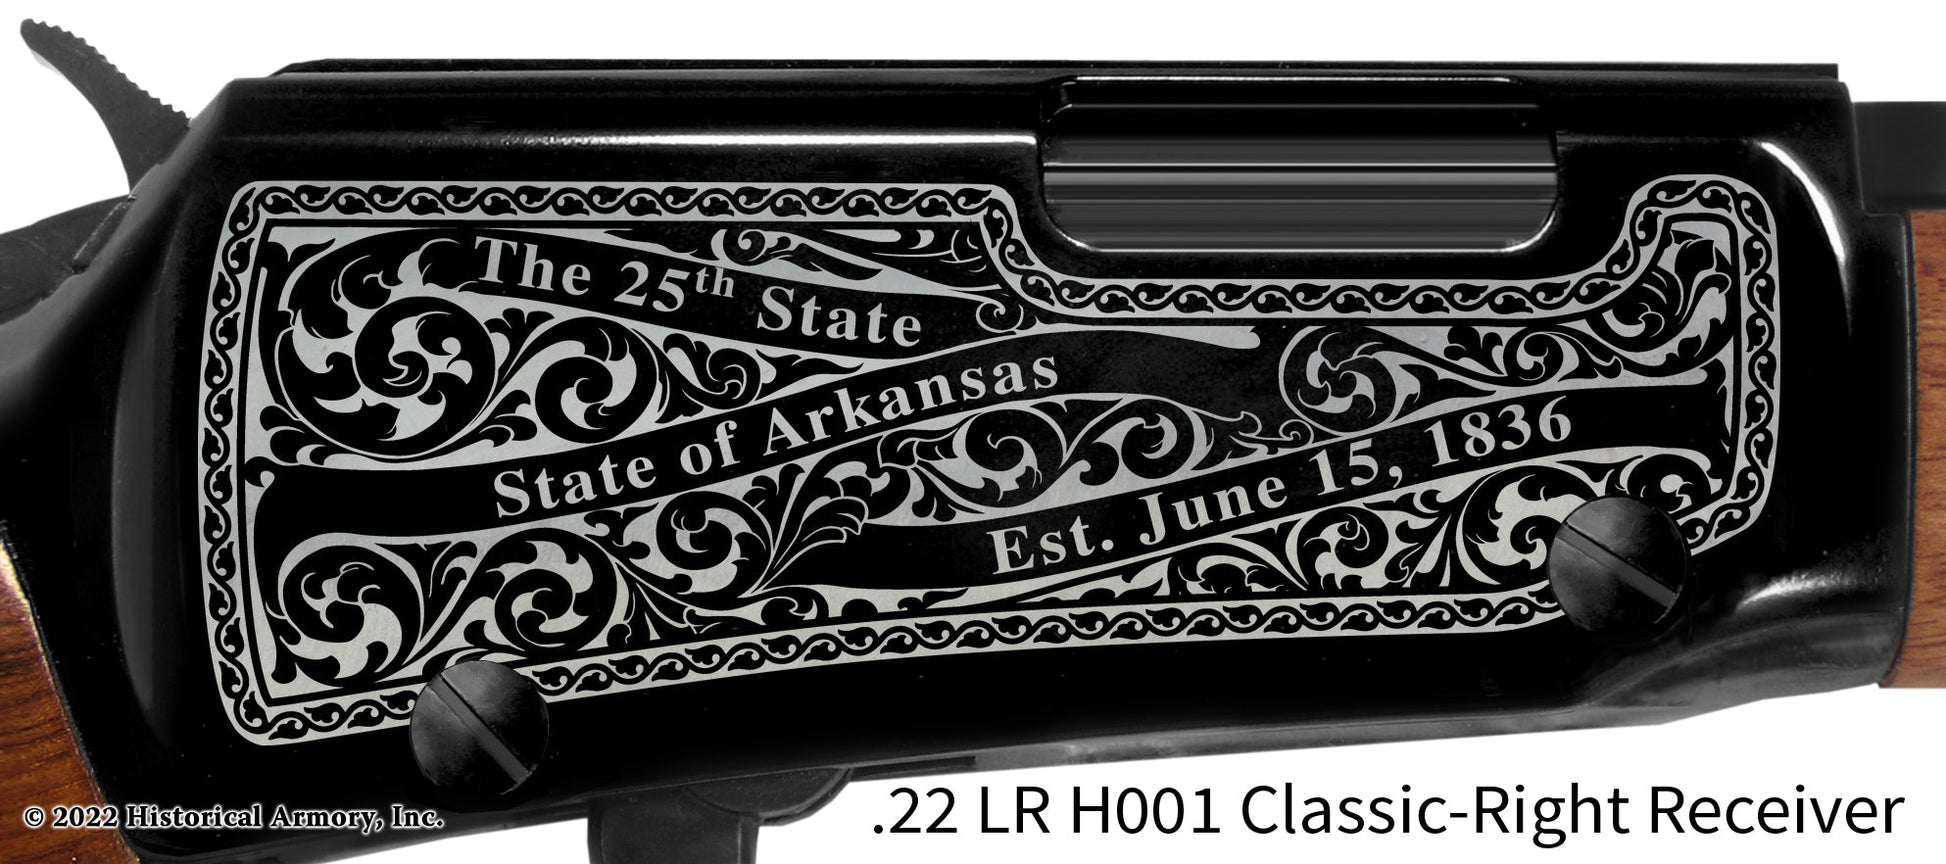 Bradley County Arkansas Engraved Henry H001 Rifle